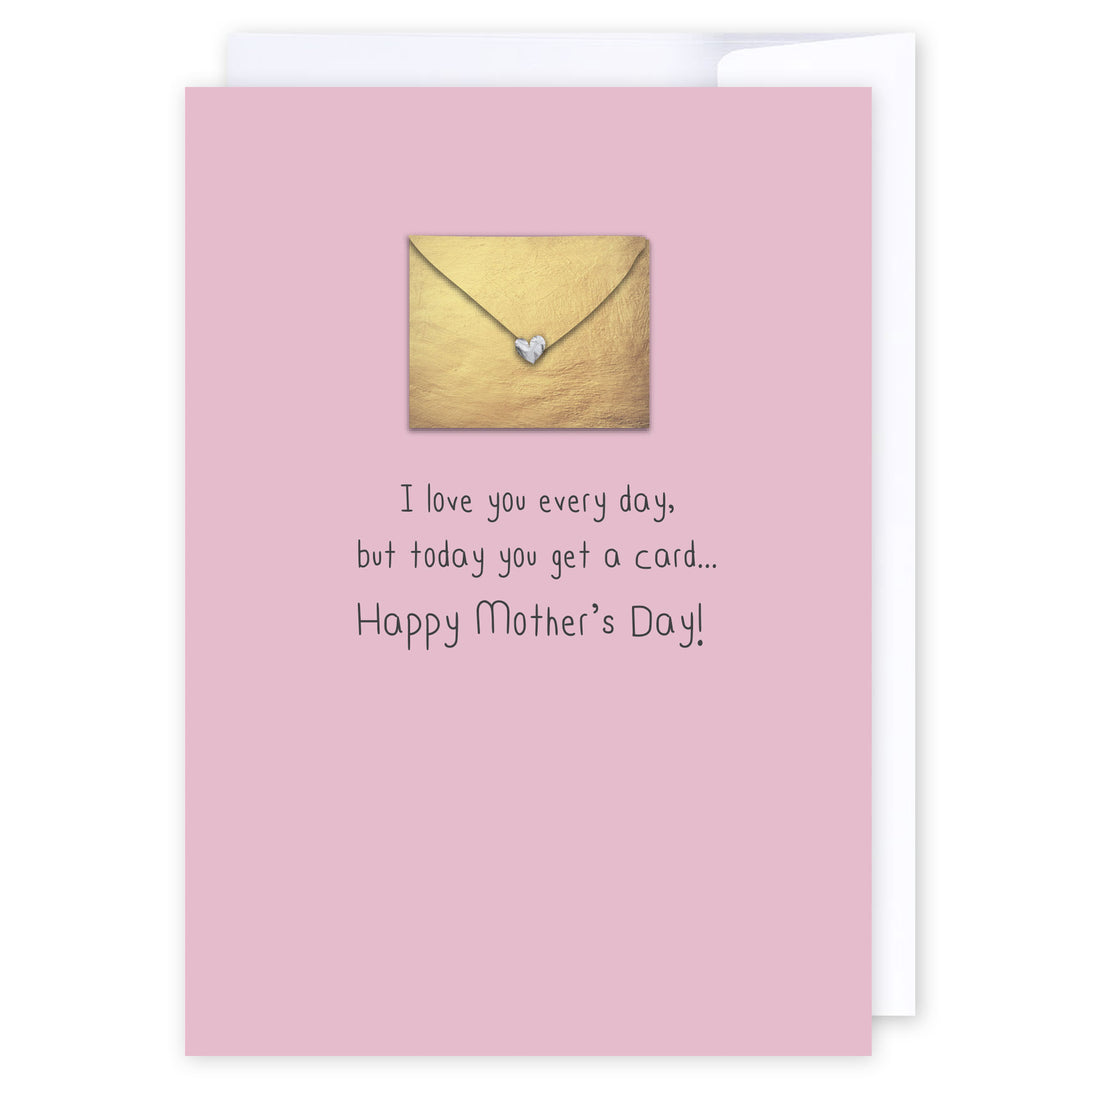 Today you get a card Mum